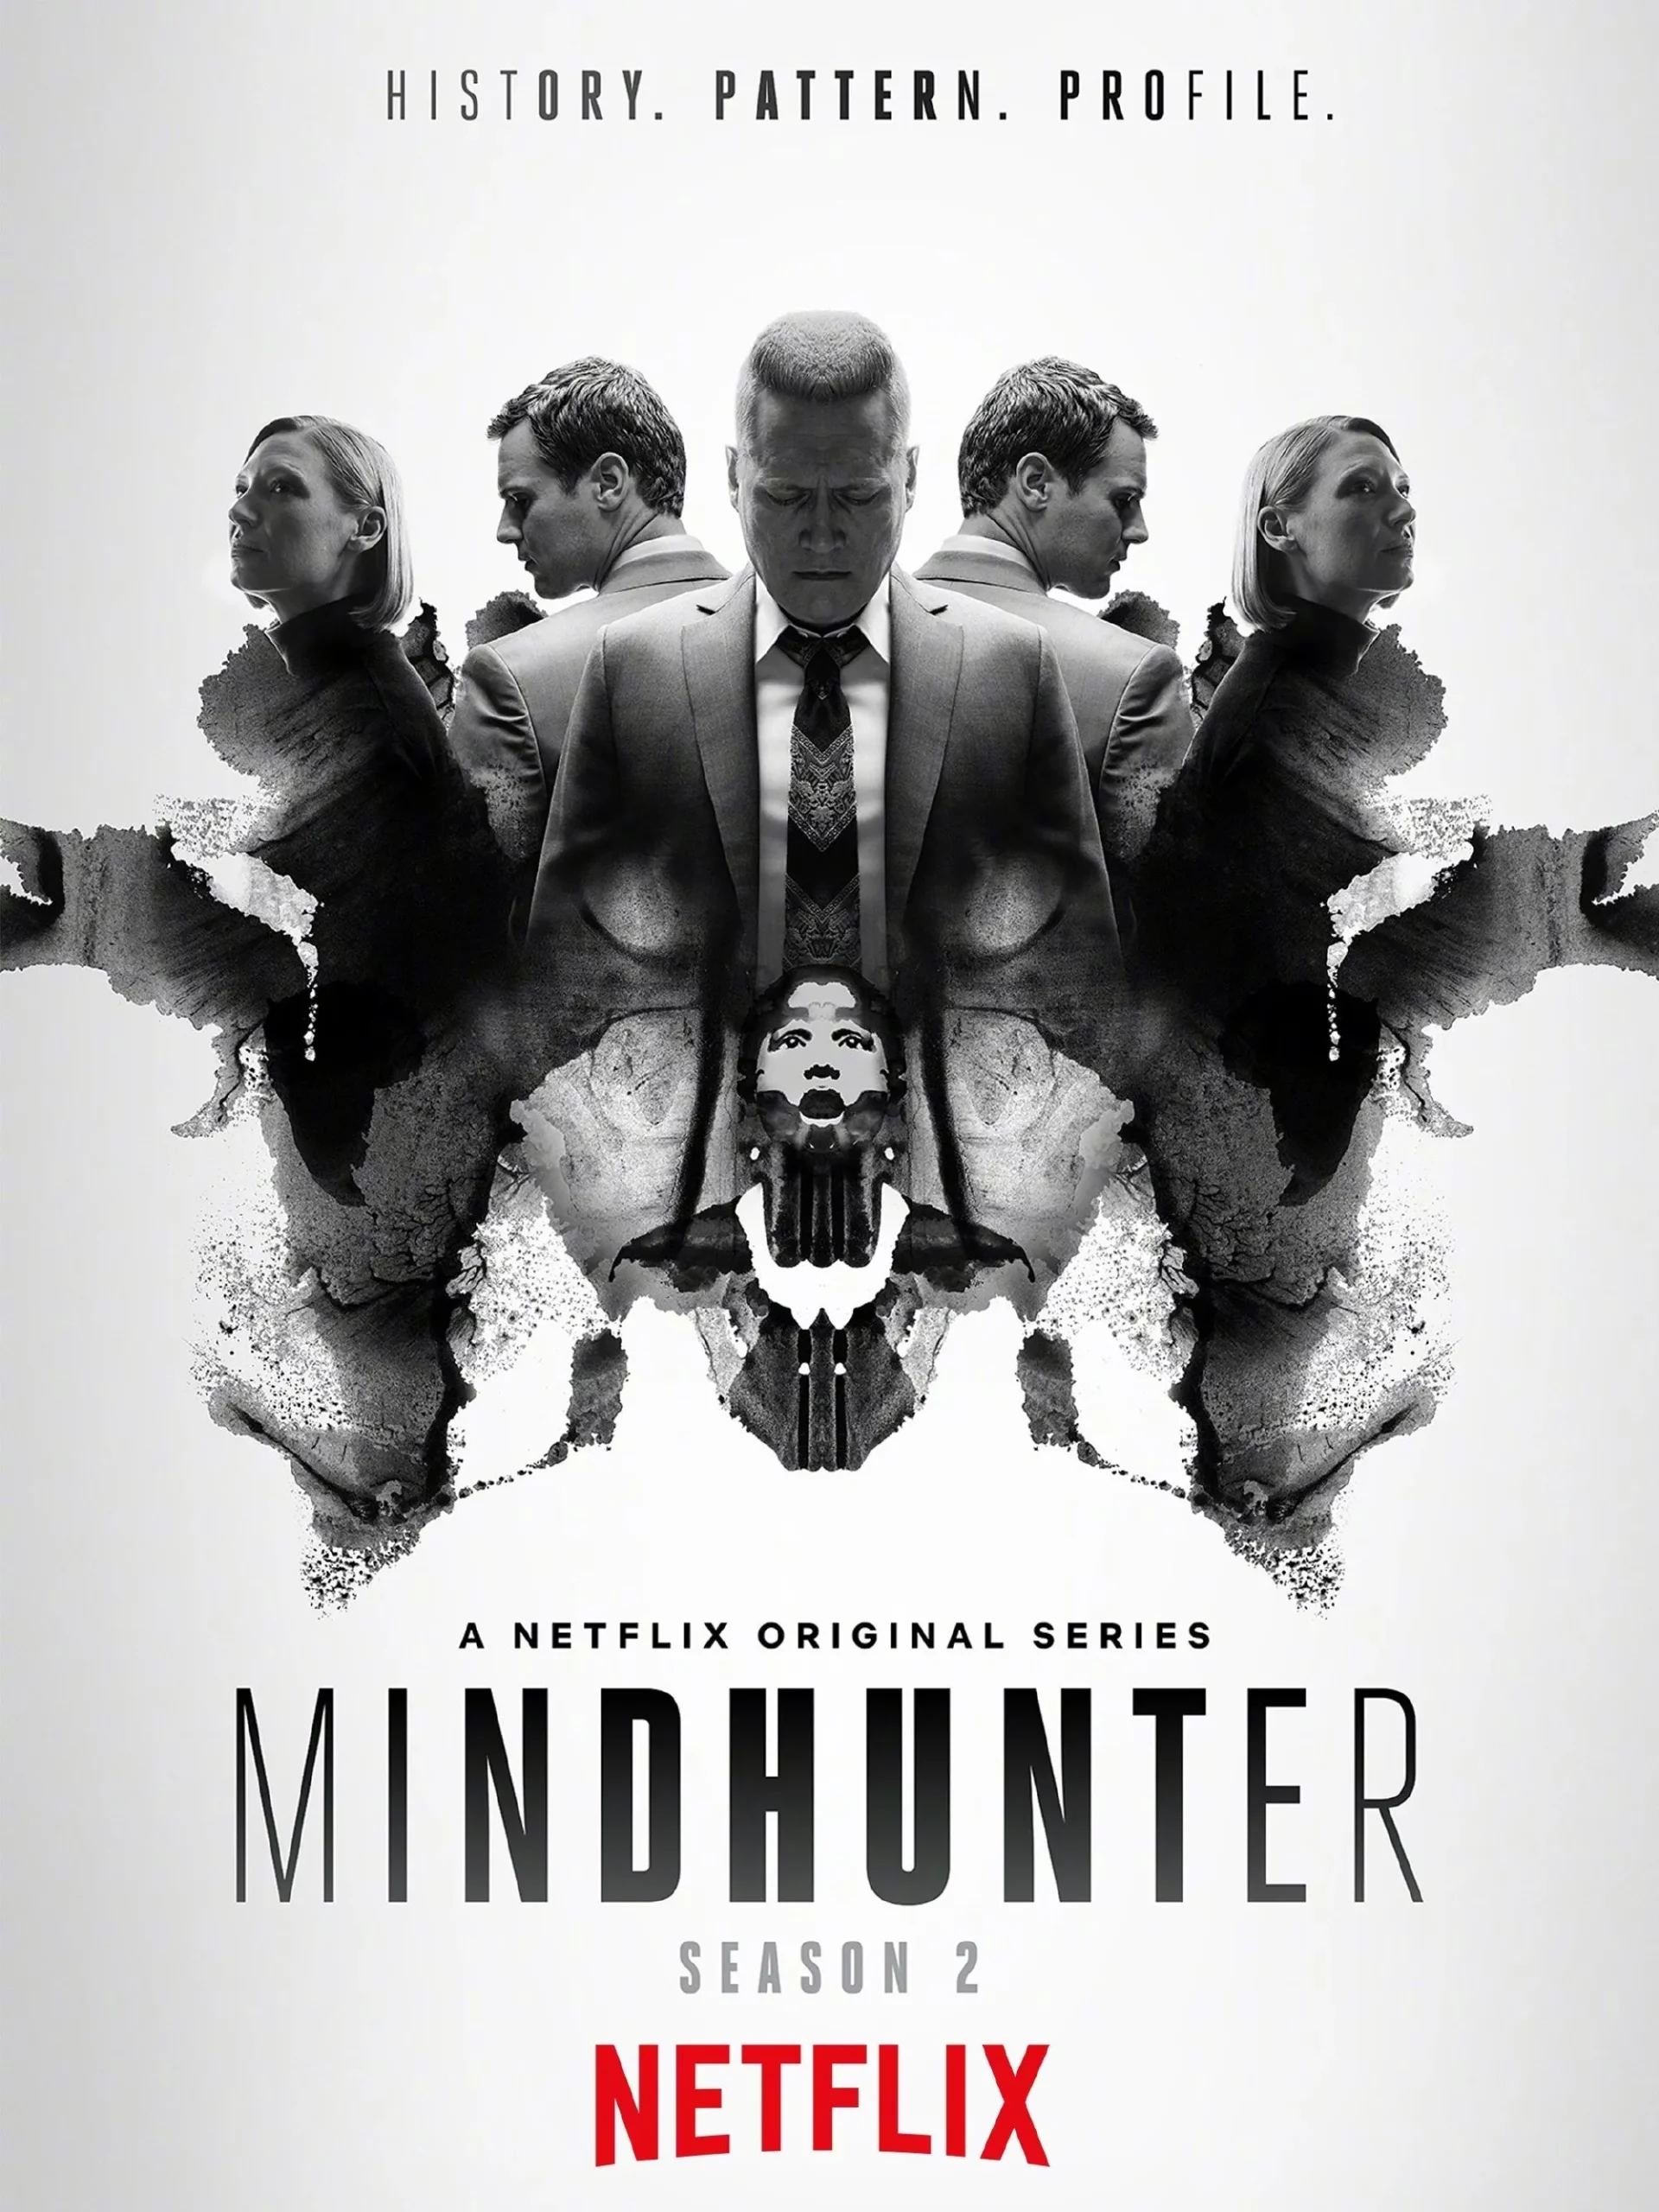 David Fincher reveals 'Mindhunter' won't have a third season | FMV6